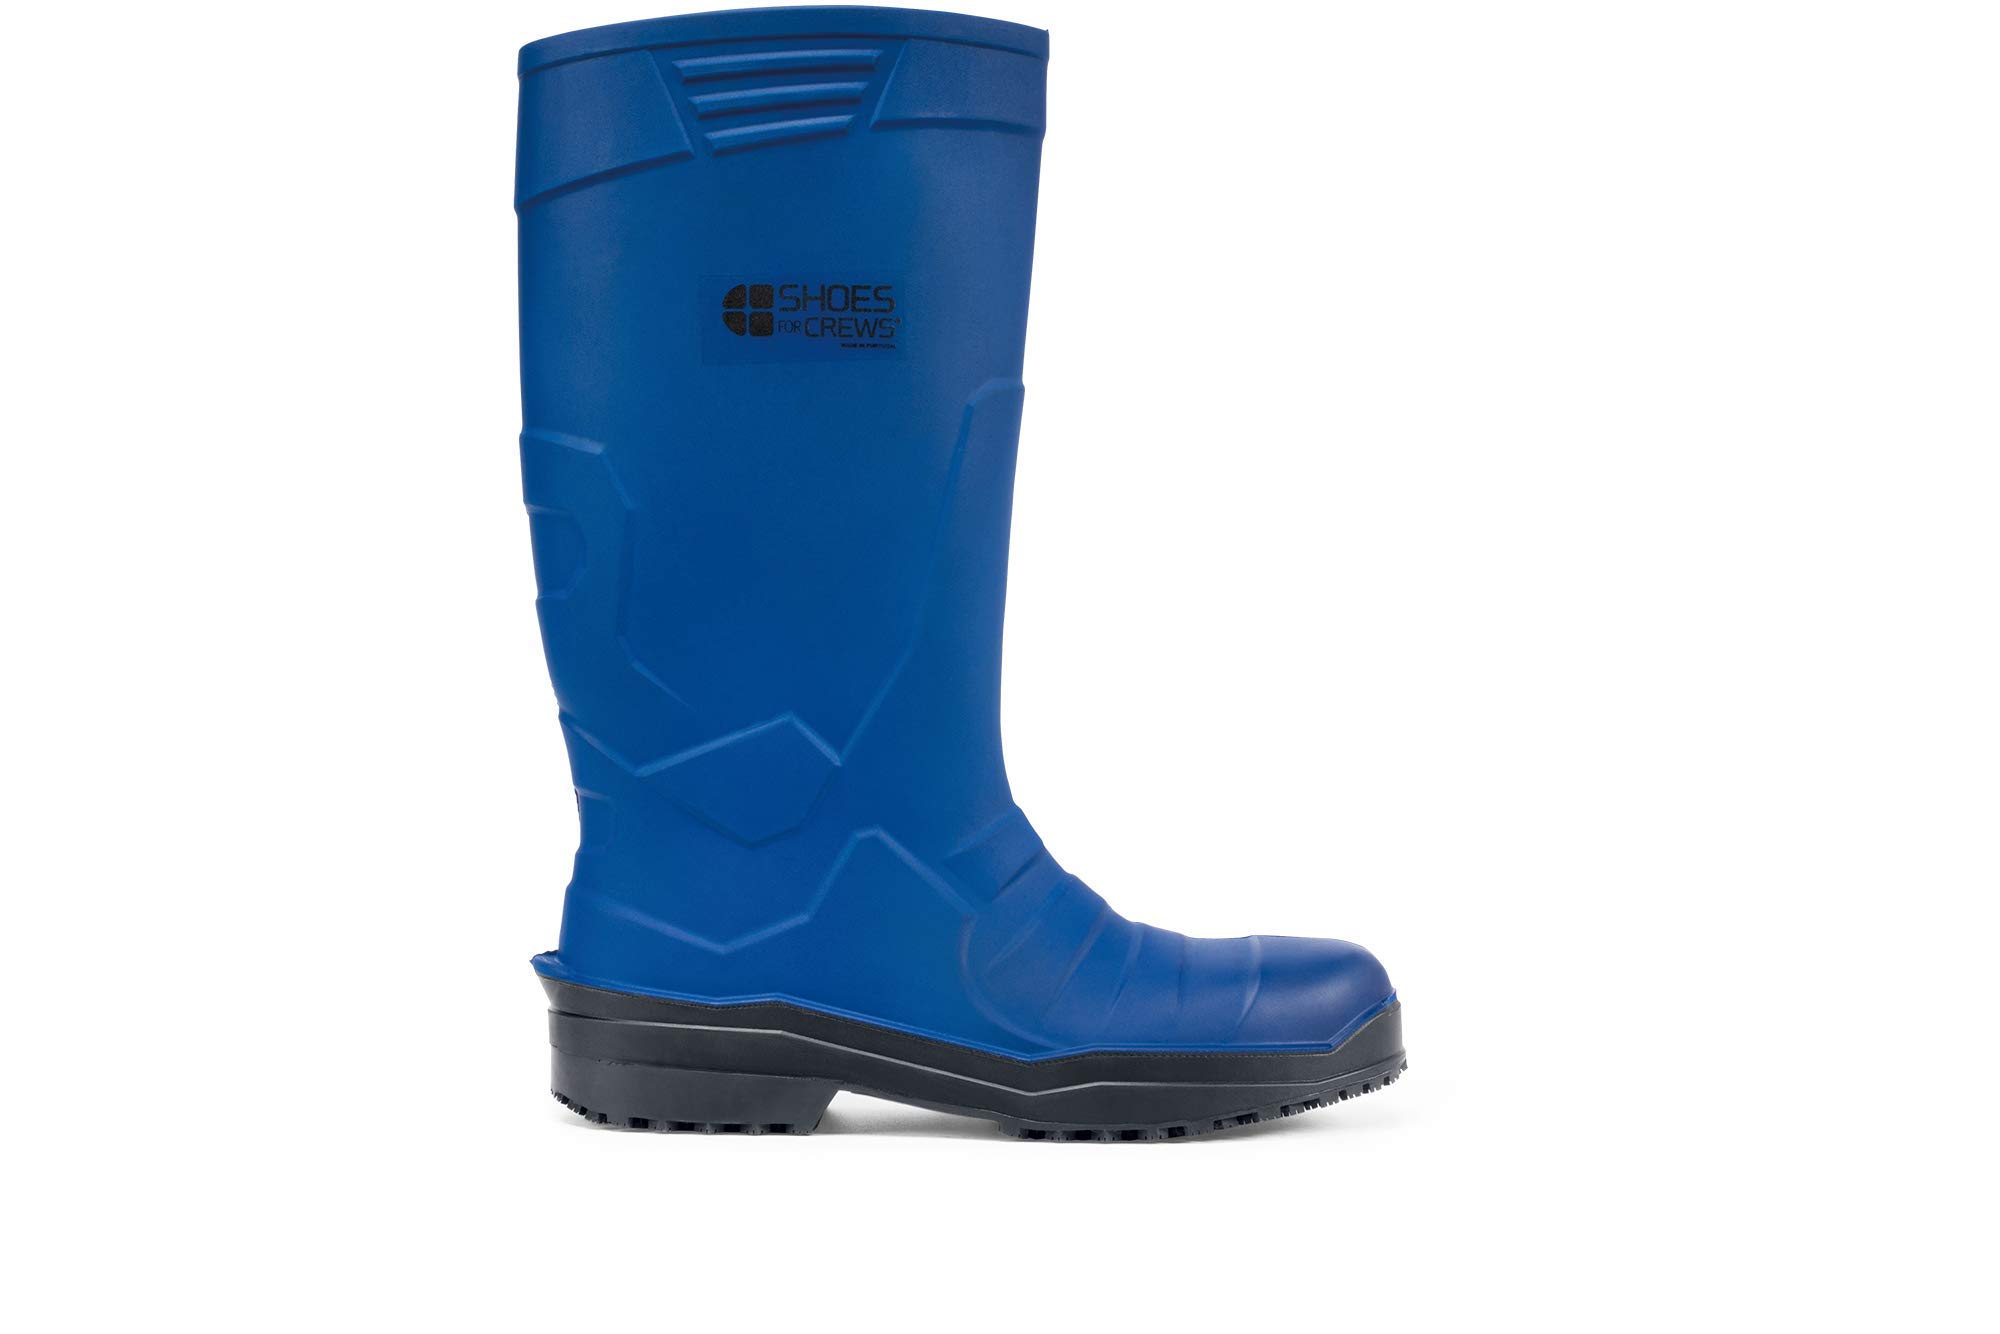 Shoes for Crews Sentinel, Men's, Women's, Unisex Steel Toe (ST) Work Boots, Slip Resistant, Water Resistant Boots